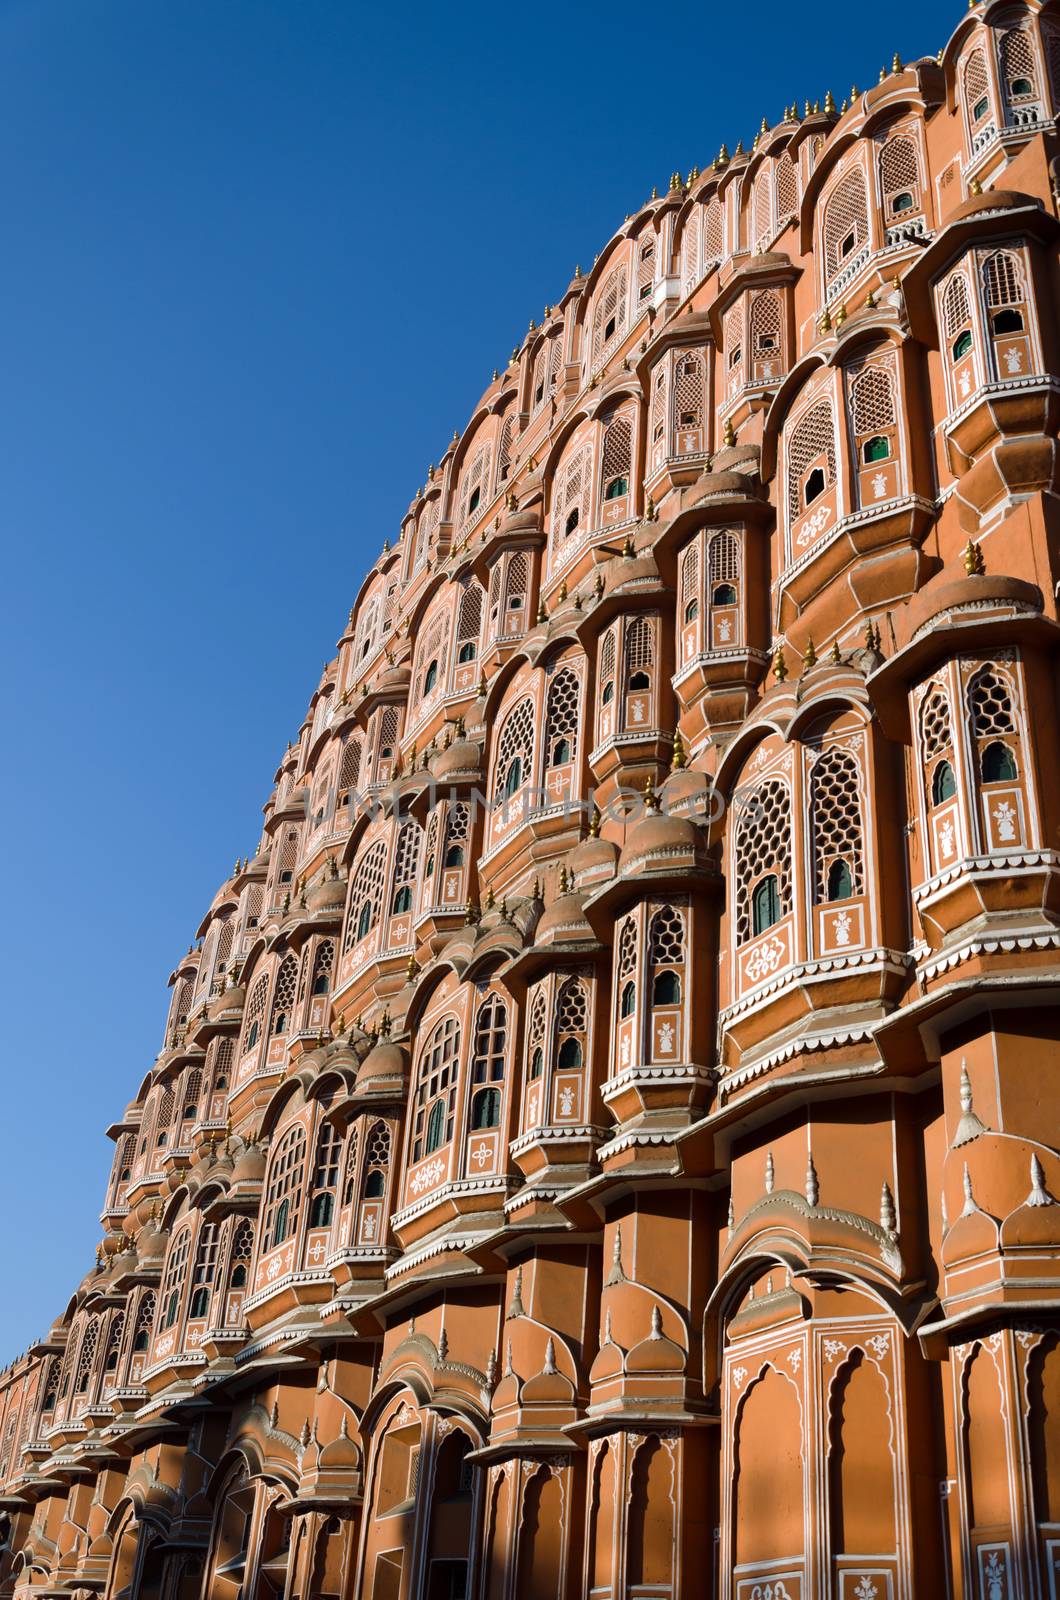 Hawa Mahal palace or Palace of the Winds in Jaipur by siraanamwong